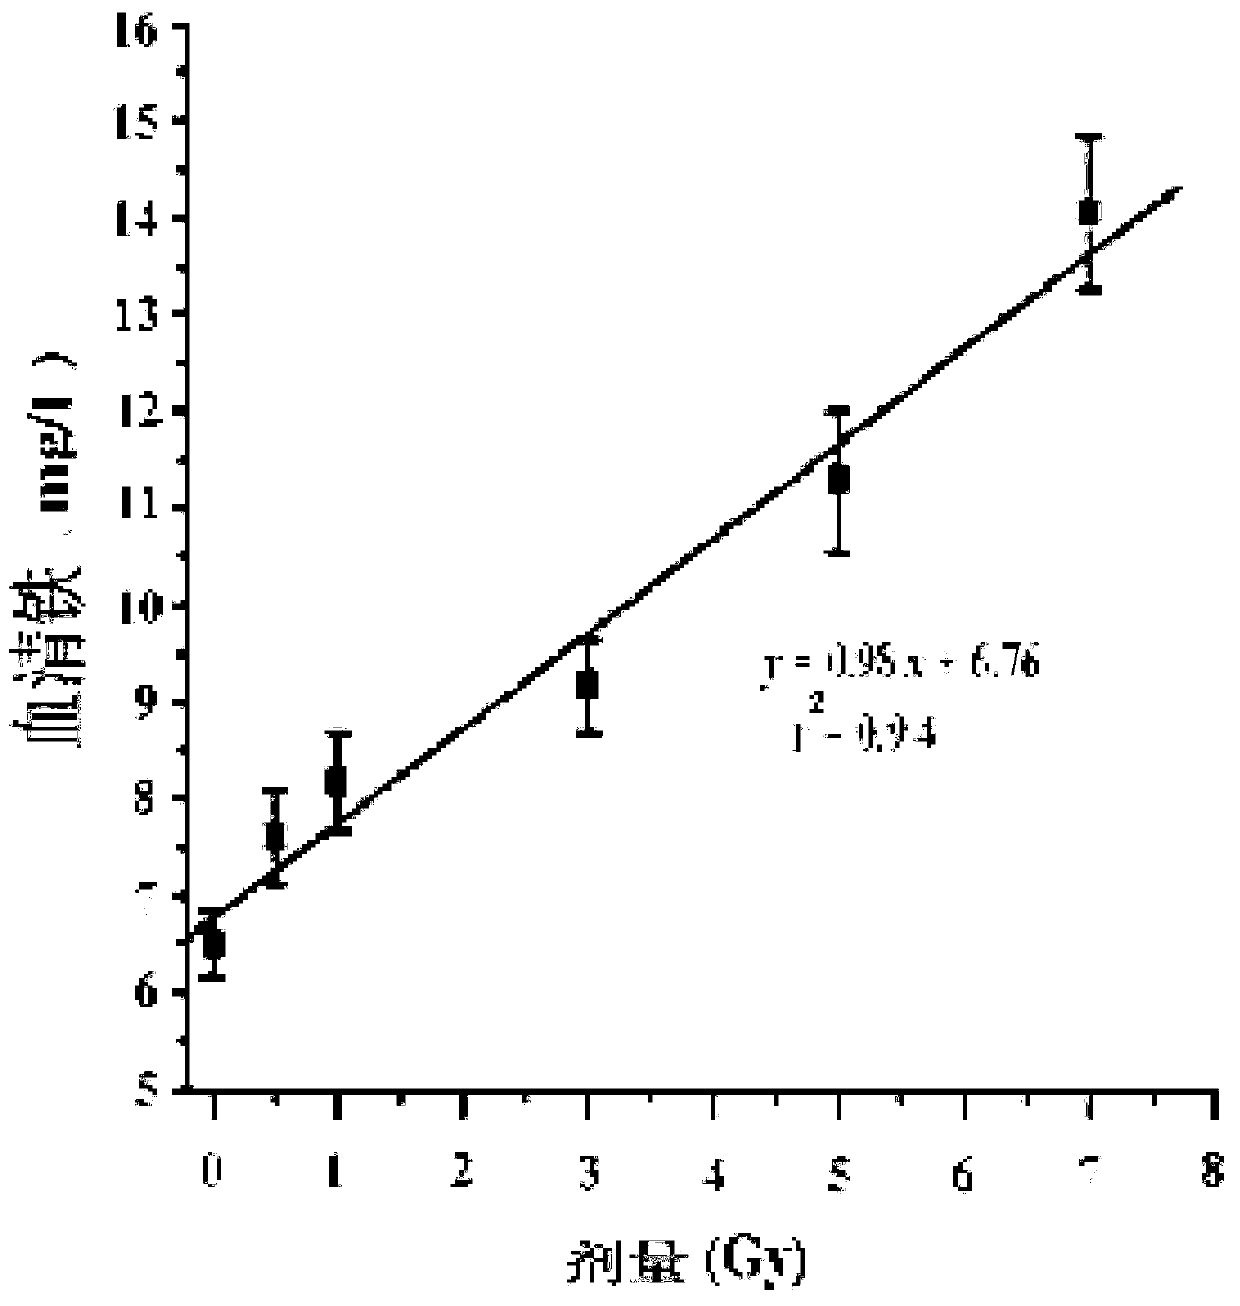 Radiation biological dose estimation method based on serum iron/serum copper